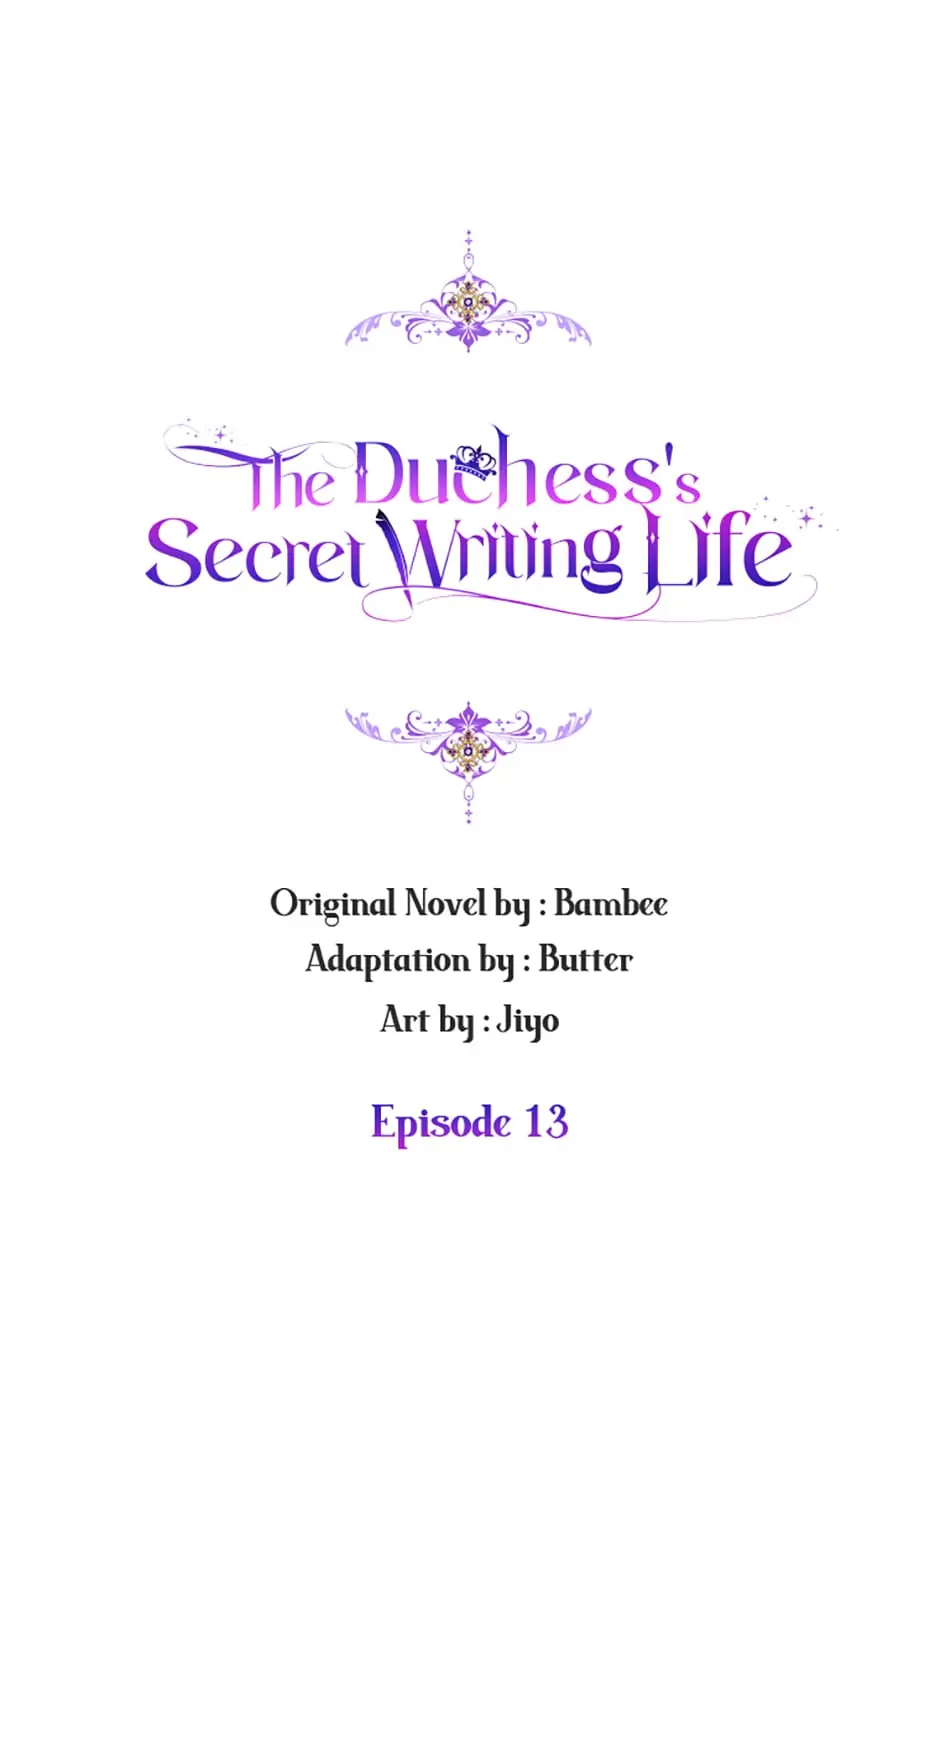 The Duchess’ Secret Writings chapter 13